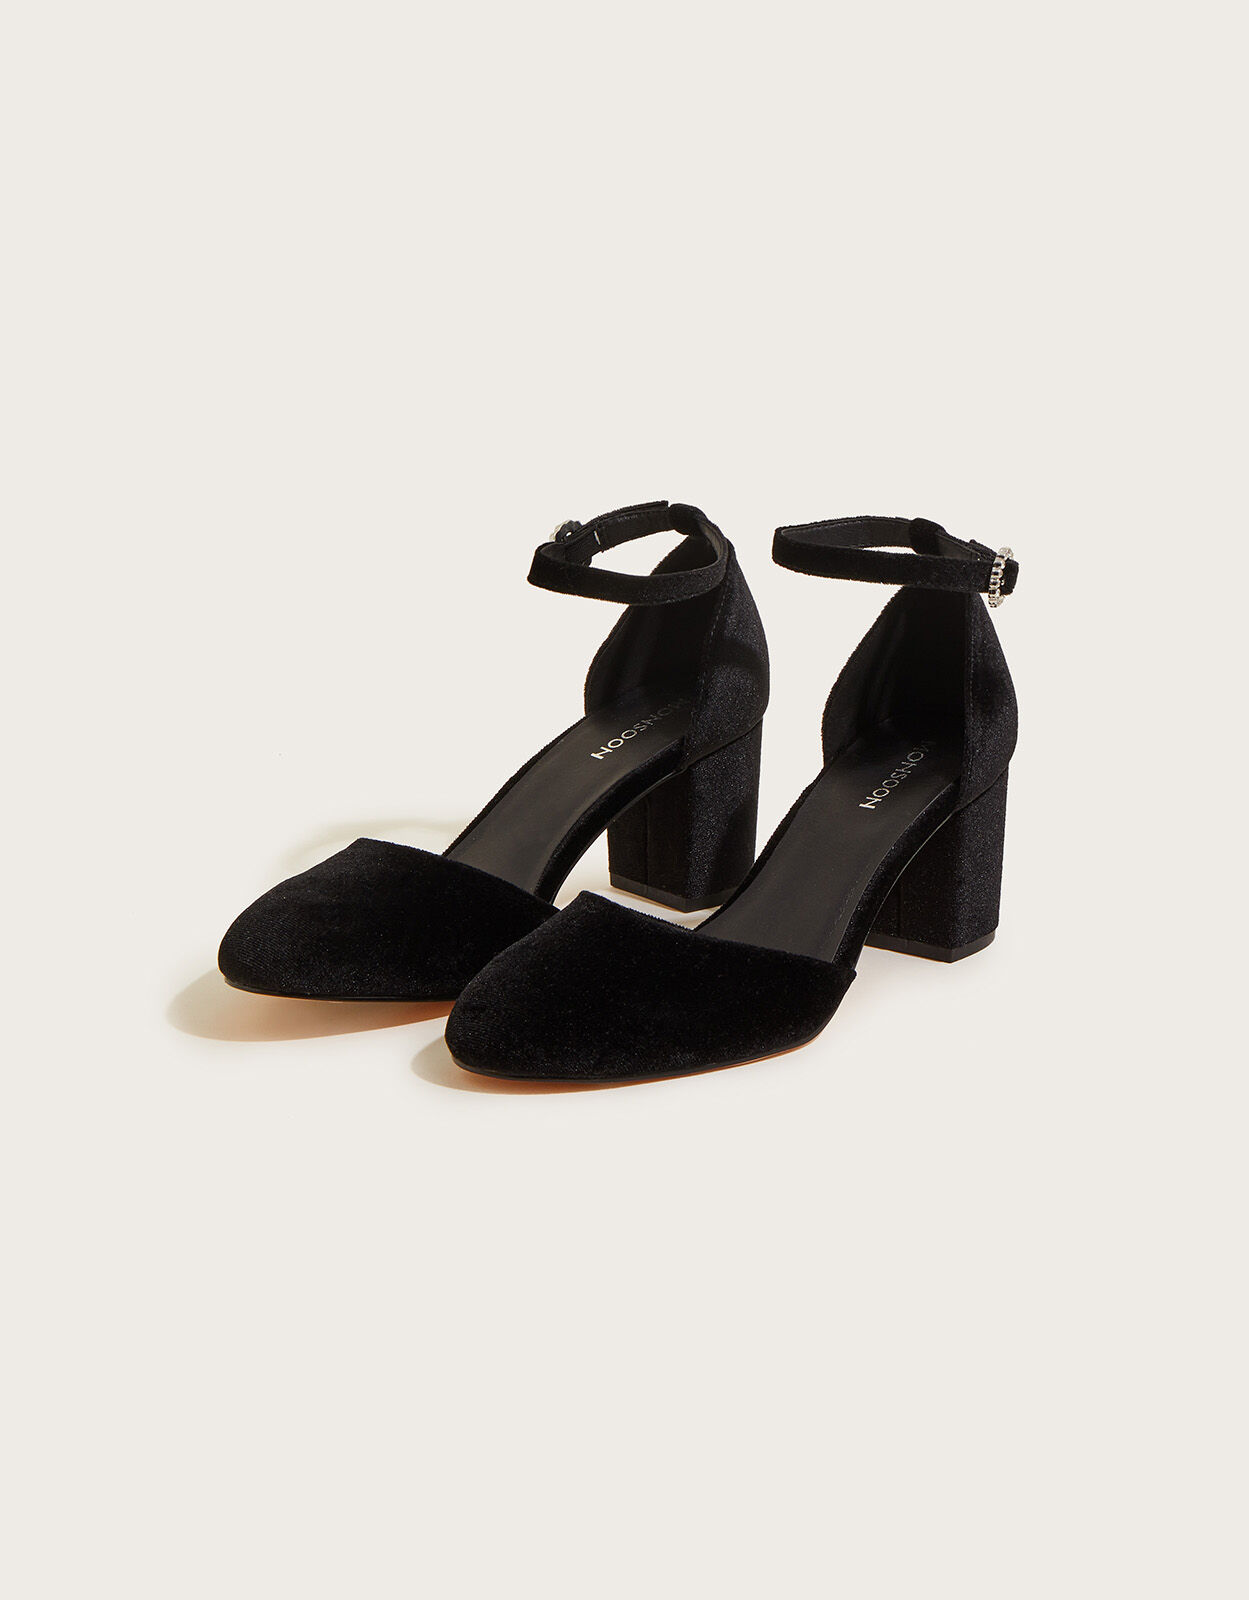 Black Peep Toe Low Heels - Ask Dress Boutique